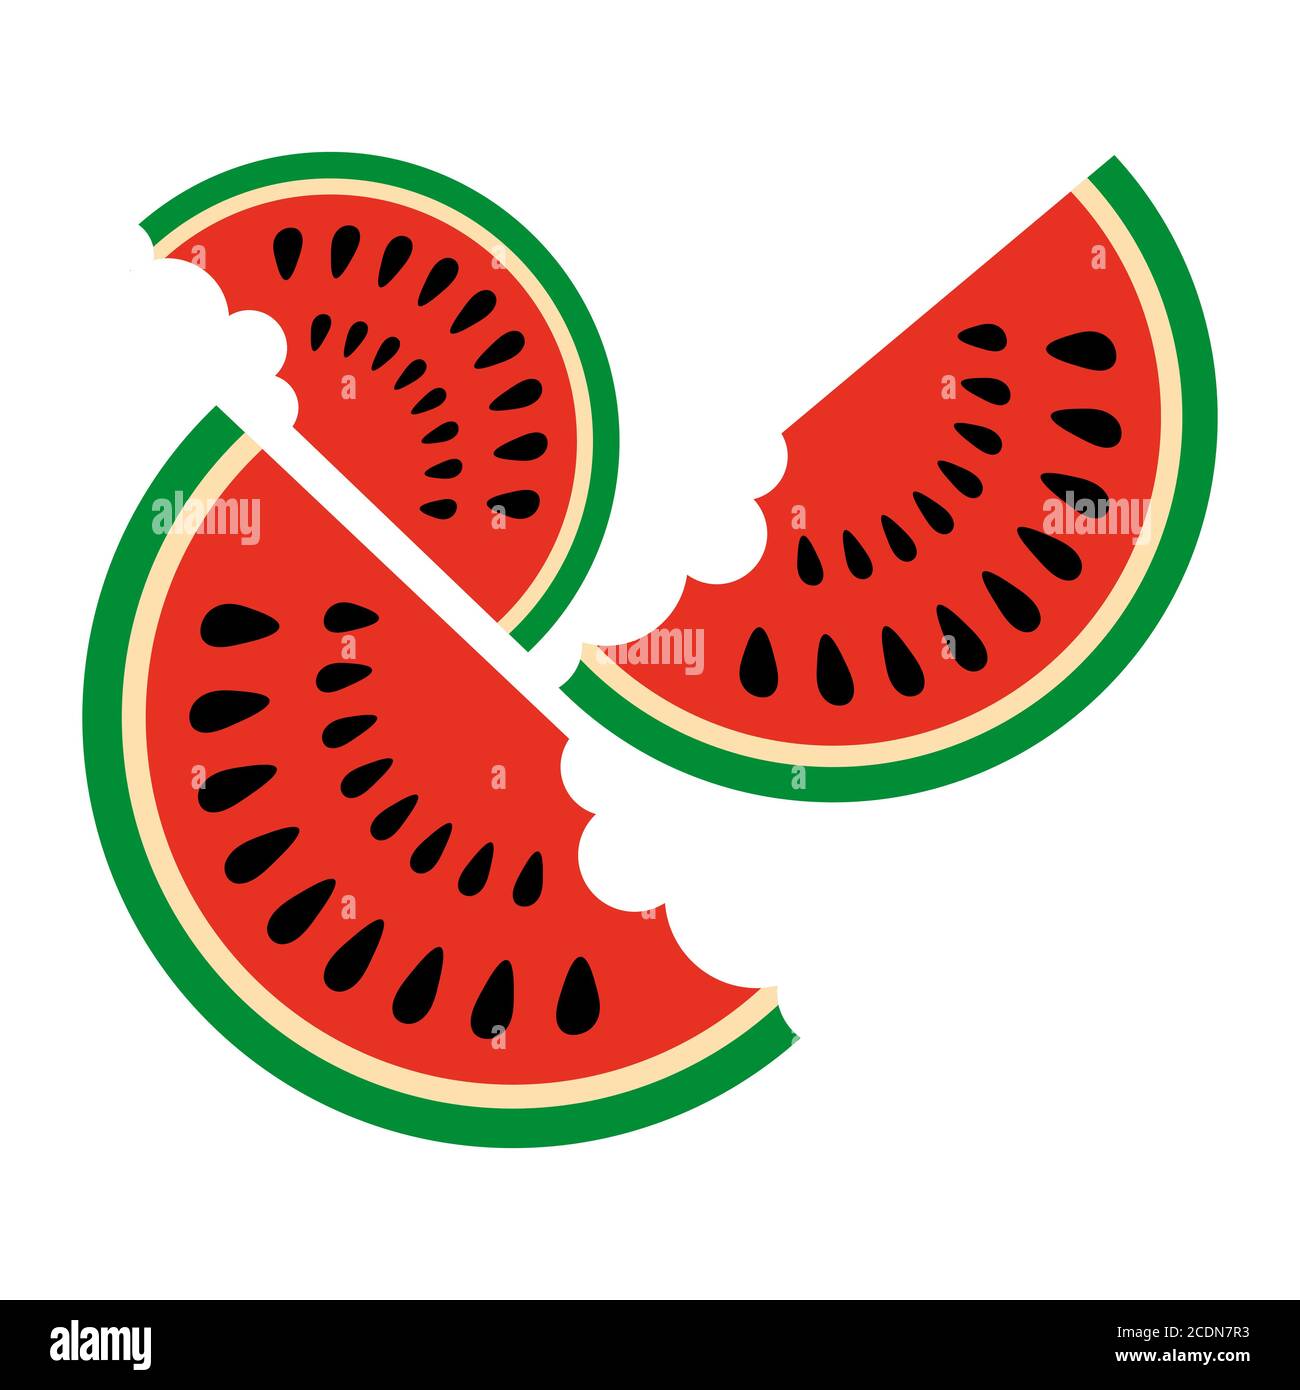 Watermelon slices vector illustration Stock Vector